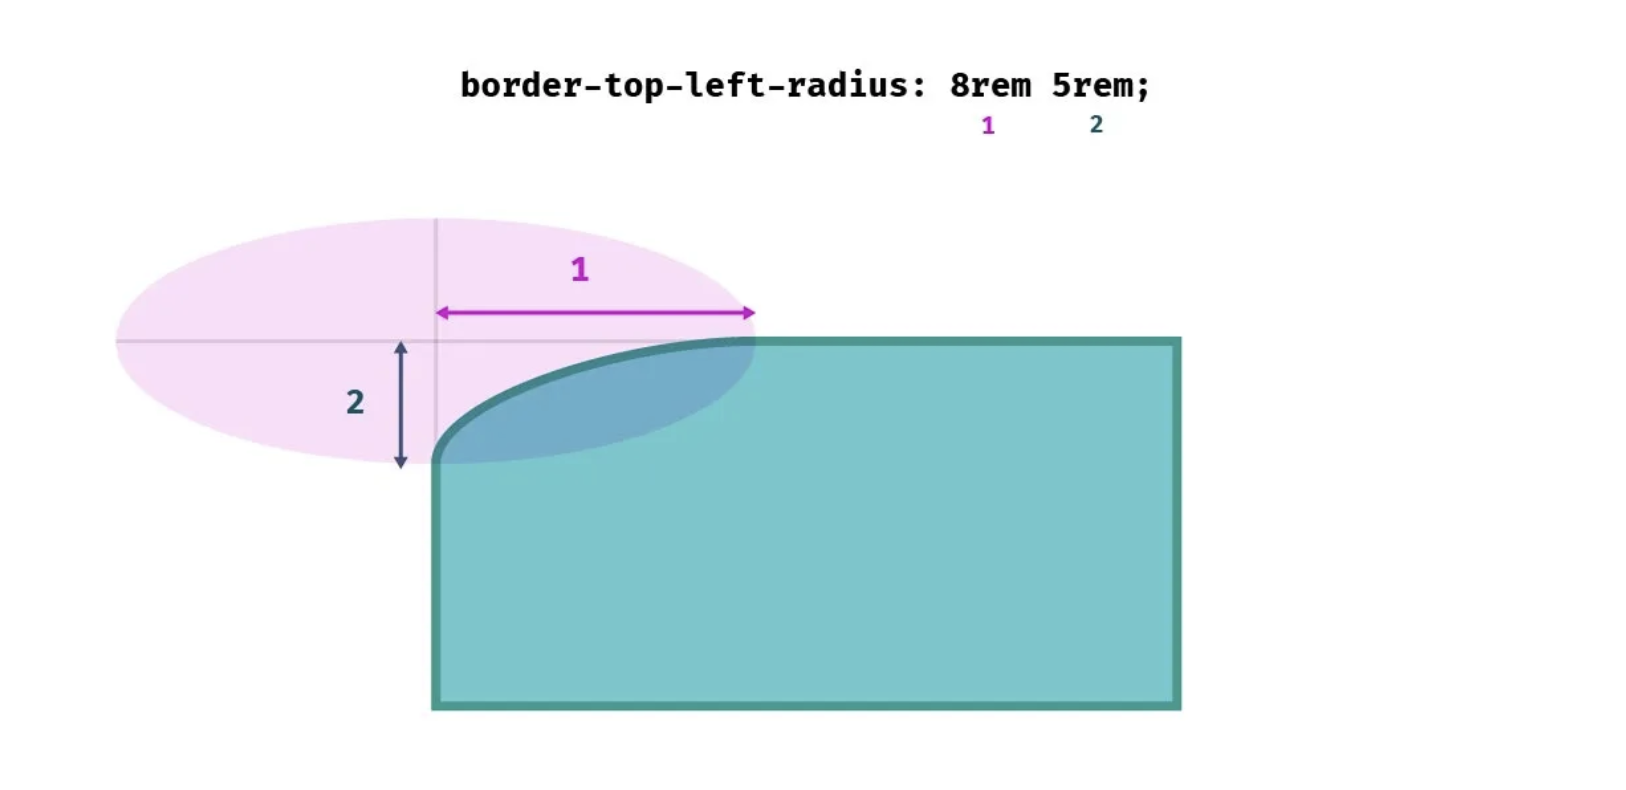 Visual explanation of "border-top-left-radius: 8rem 5rem"